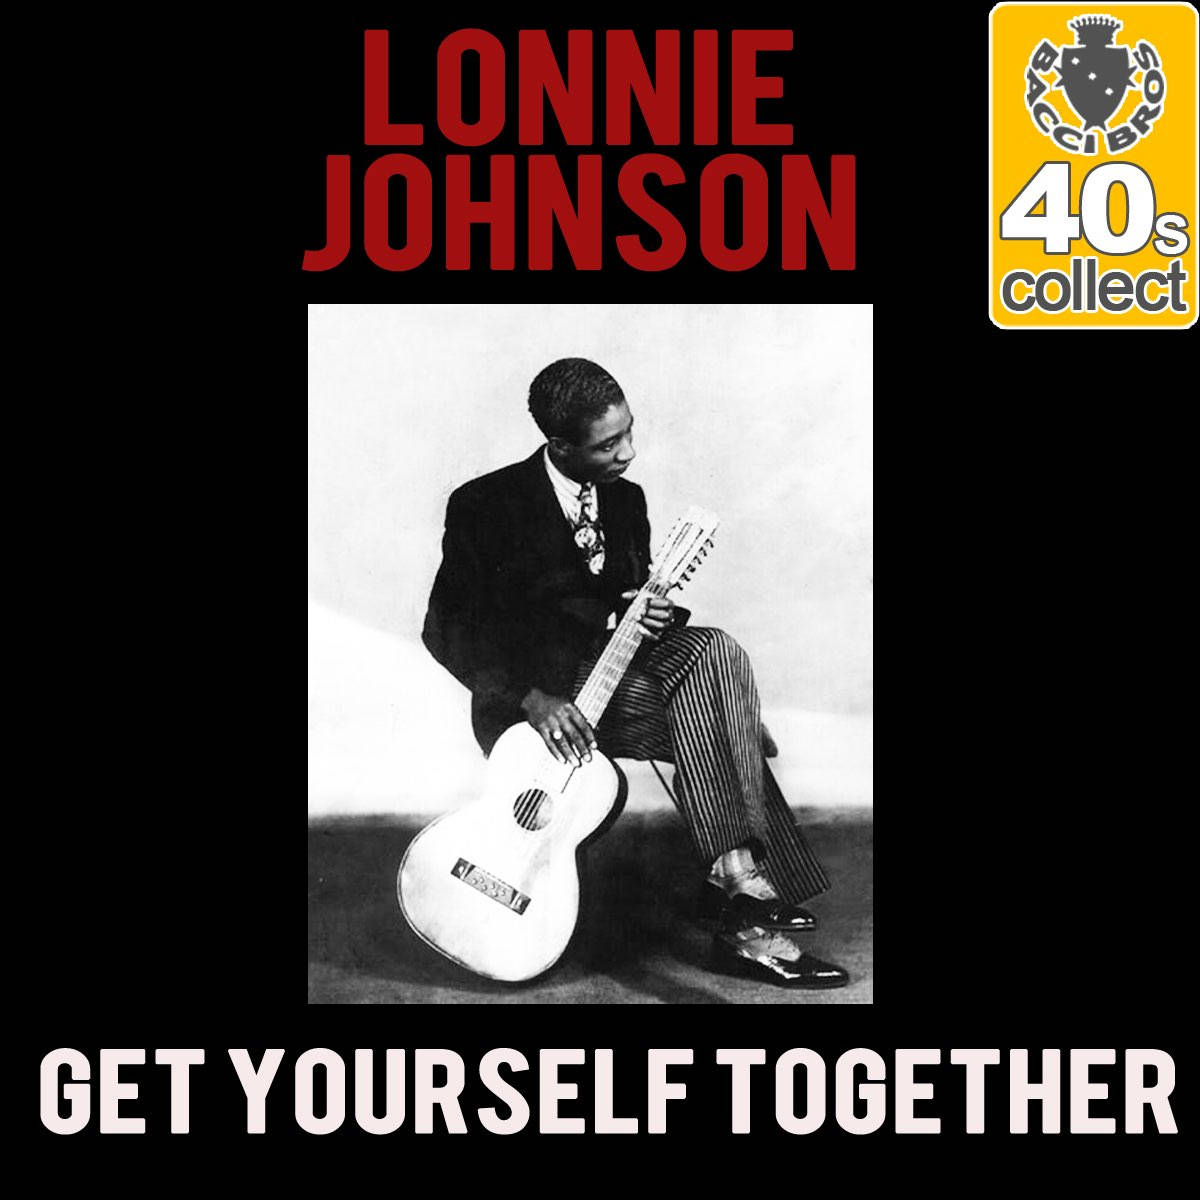 Guitar Of Lonnie Johnson Book Cover Wallpaper